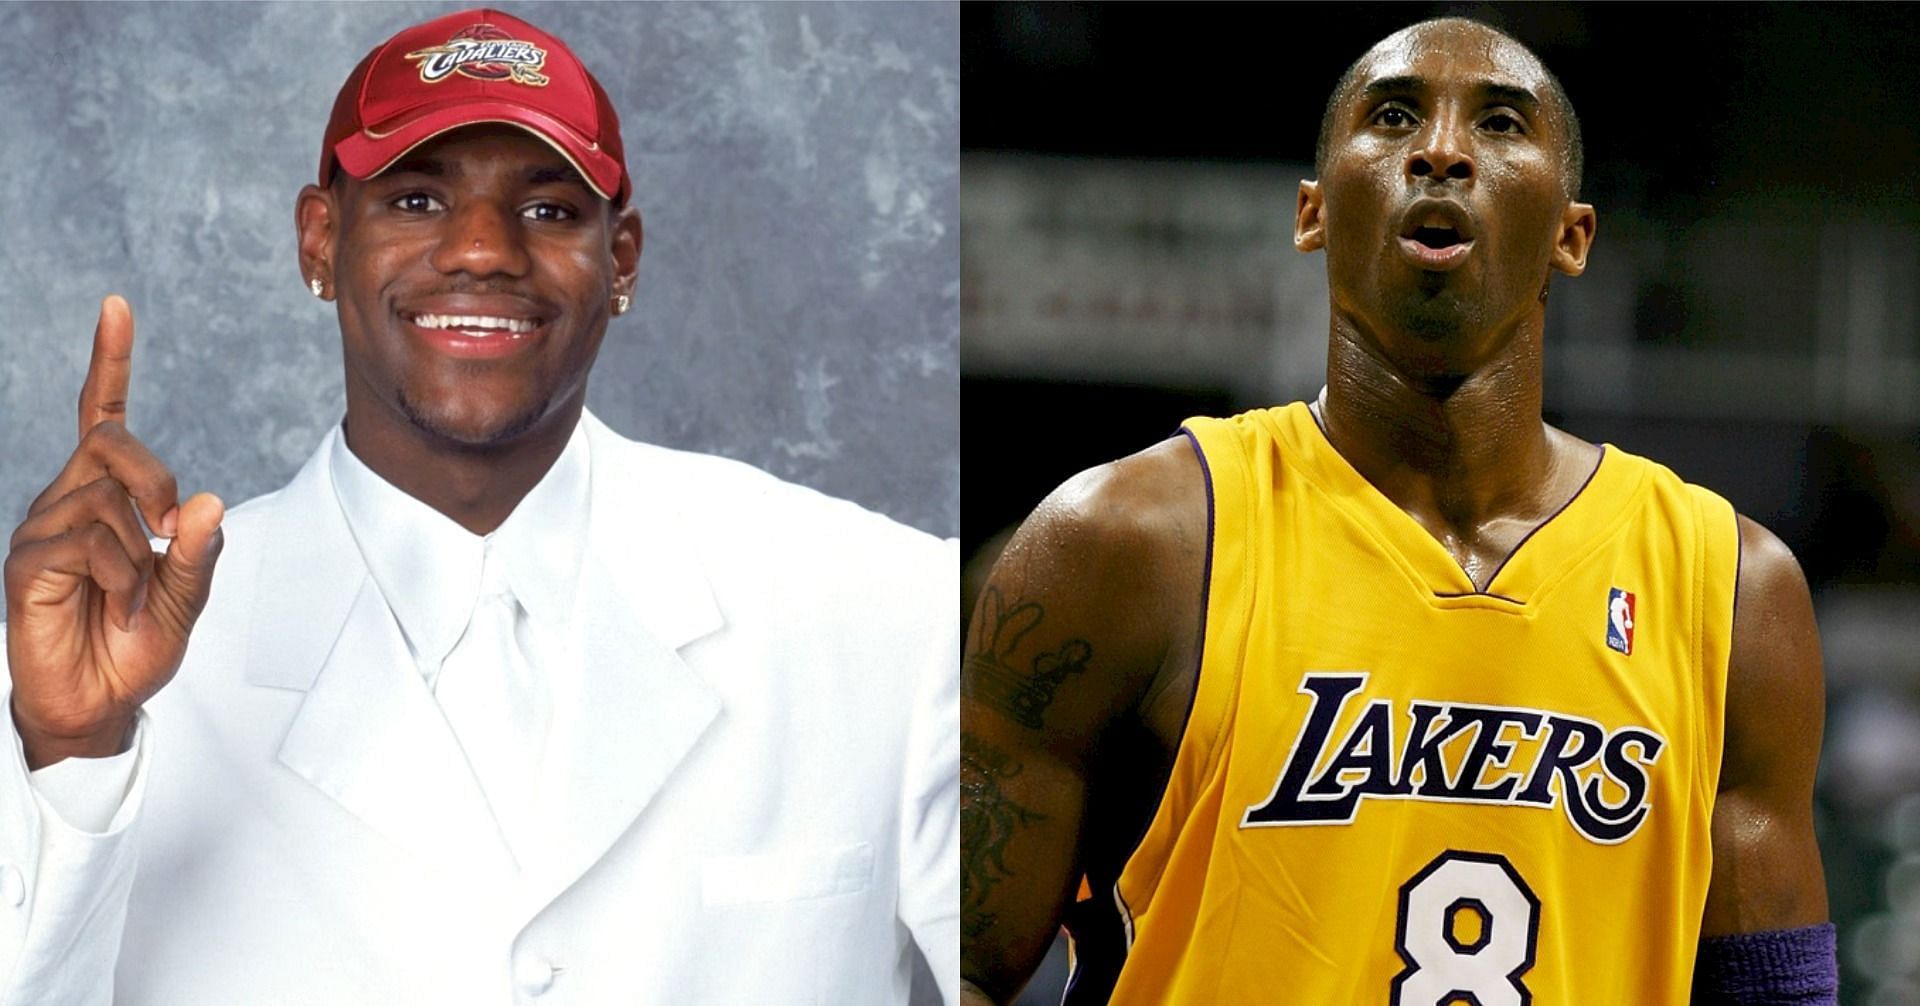 NBA legends LeBron James and Kobe Bryant